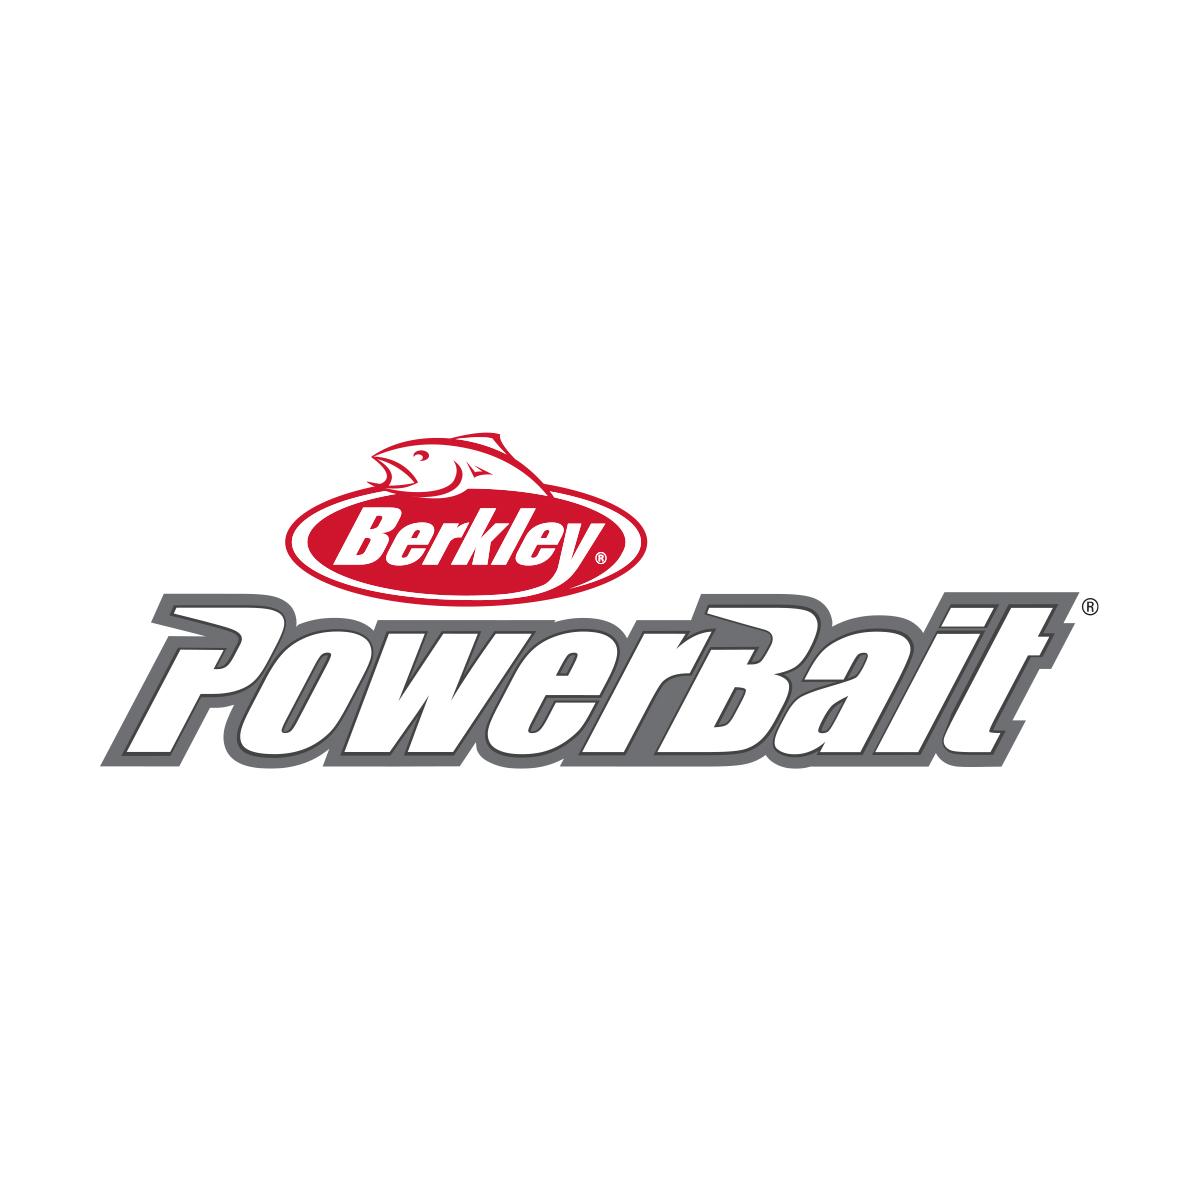 Berkley Powerbaits